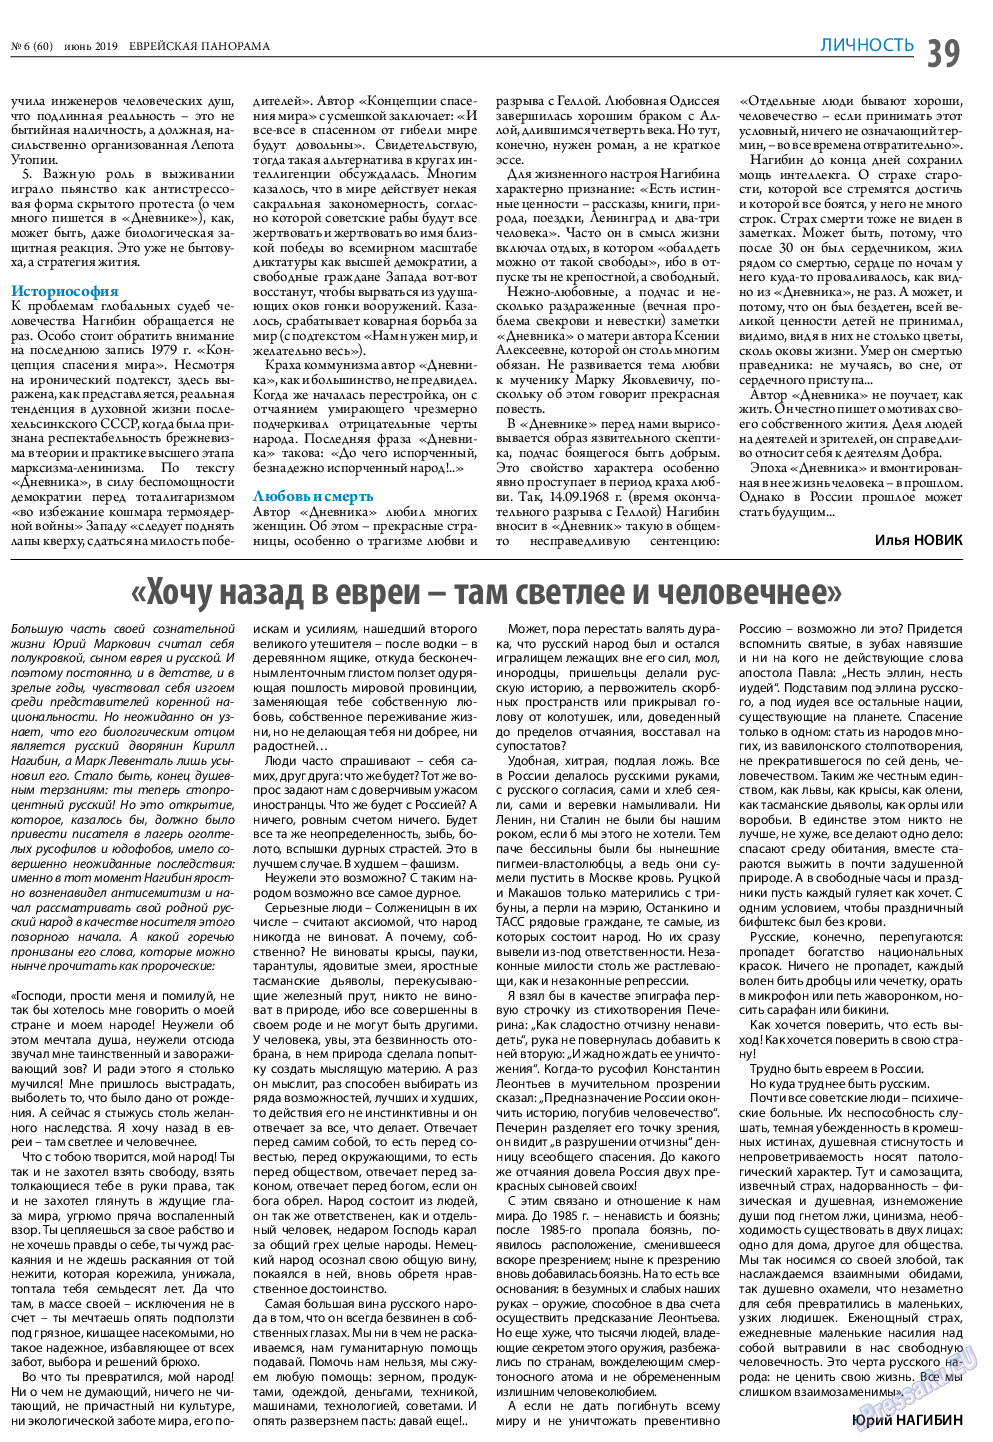 Еврейская панорама, газета. 2019 №6 стр.39